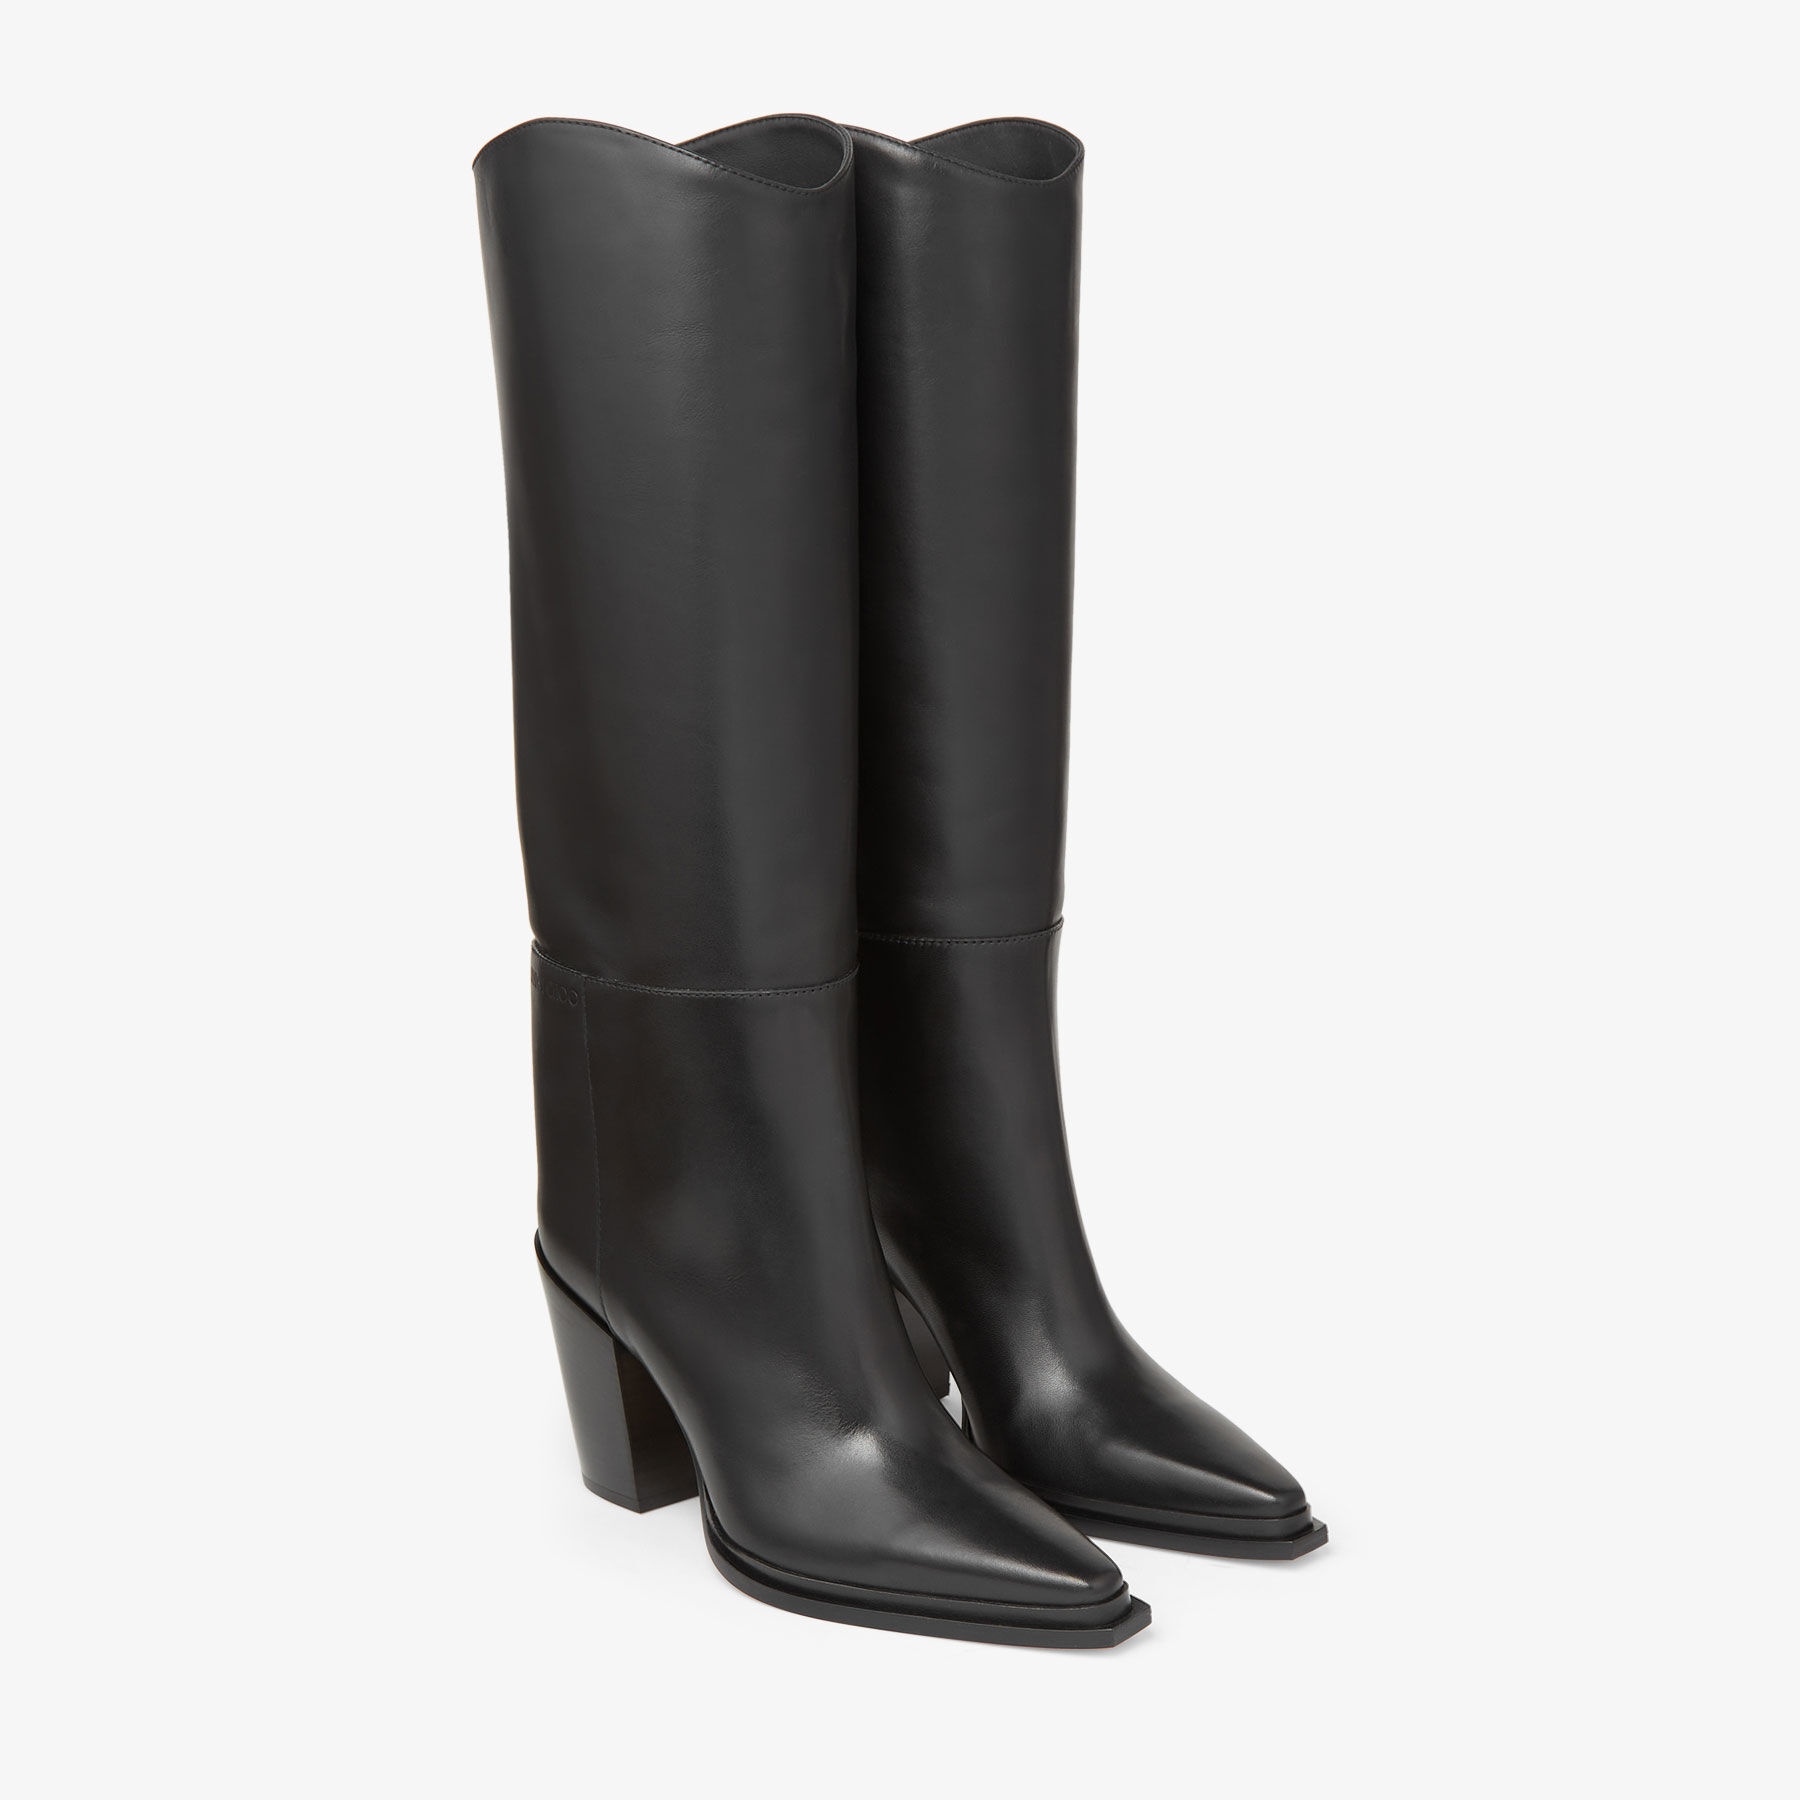 Cece 80
Black Soft Calf Leather Boots - 3